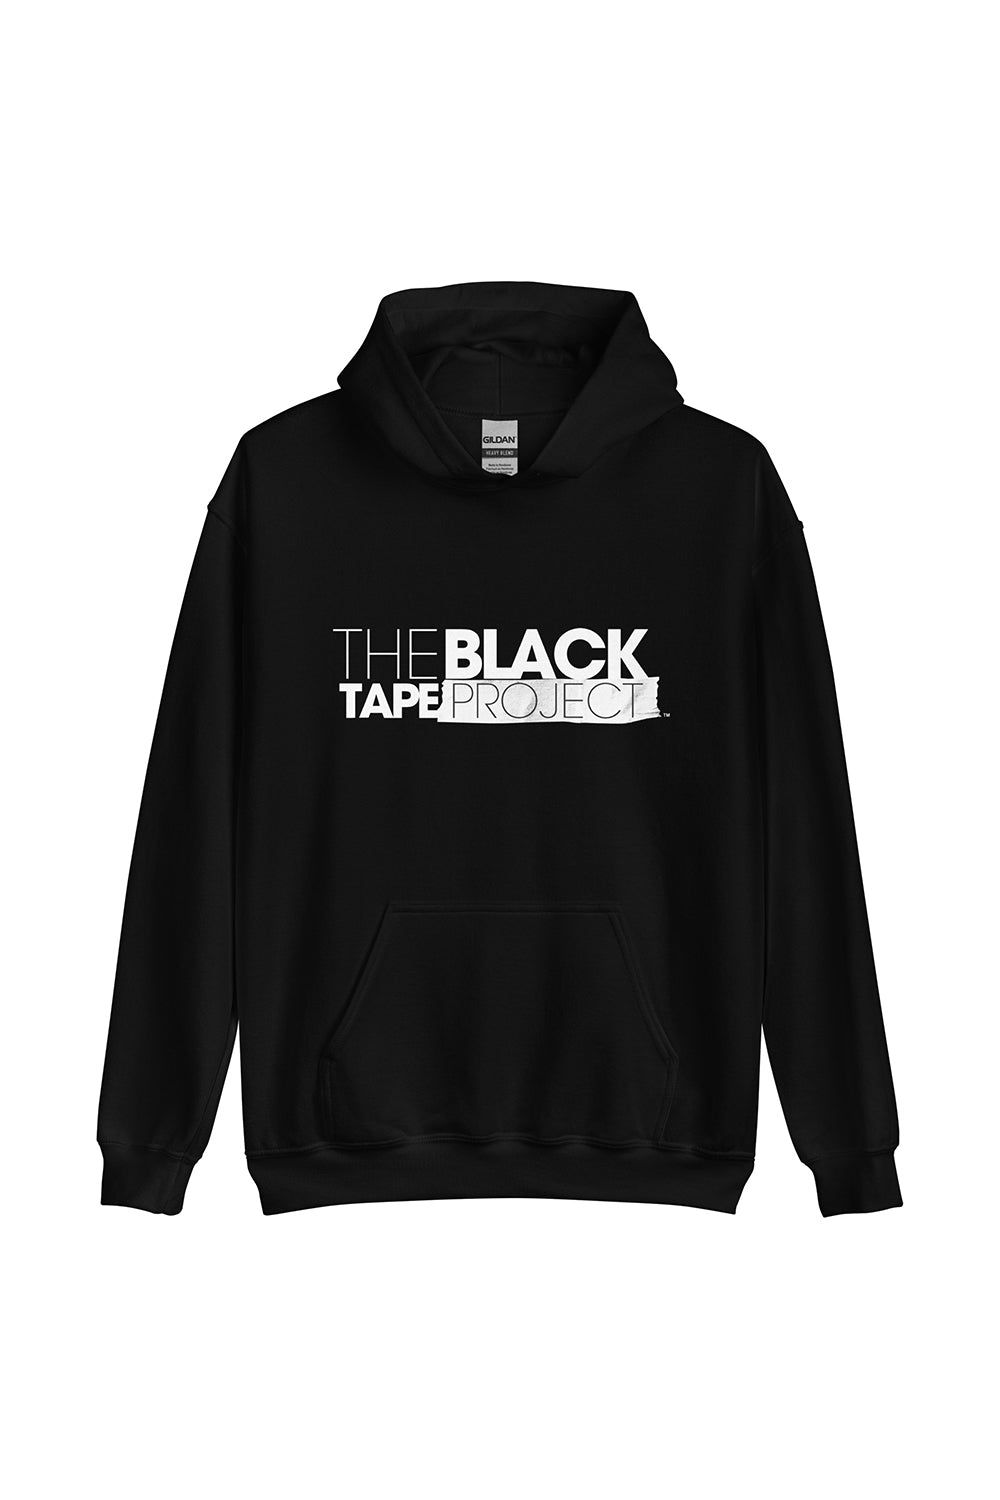 Unisex Black Tape Project Hoodie - Black Tape Project